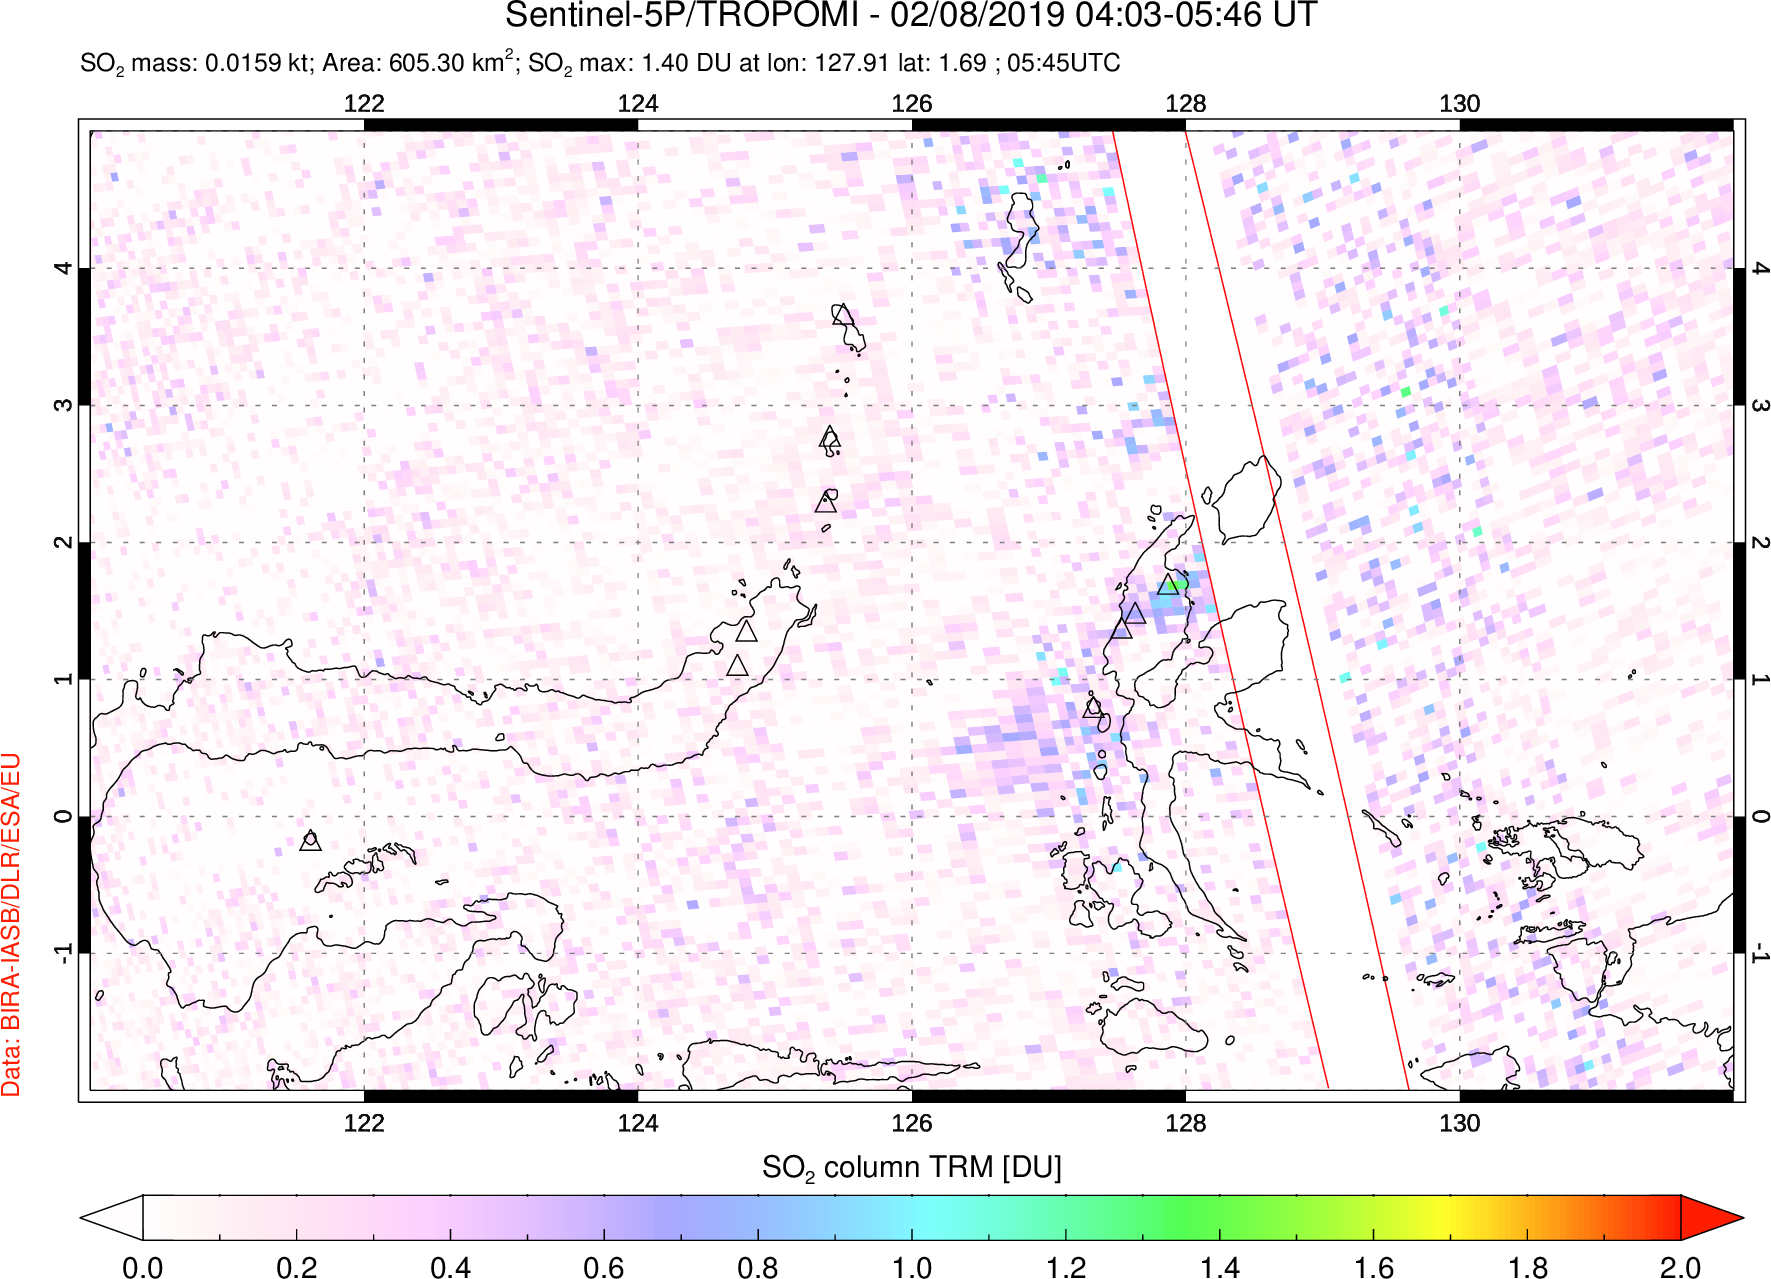 A sulfur dioxide image over Northern Sulawesi & Halmahera, Indonesia on Feb 08, 2019.